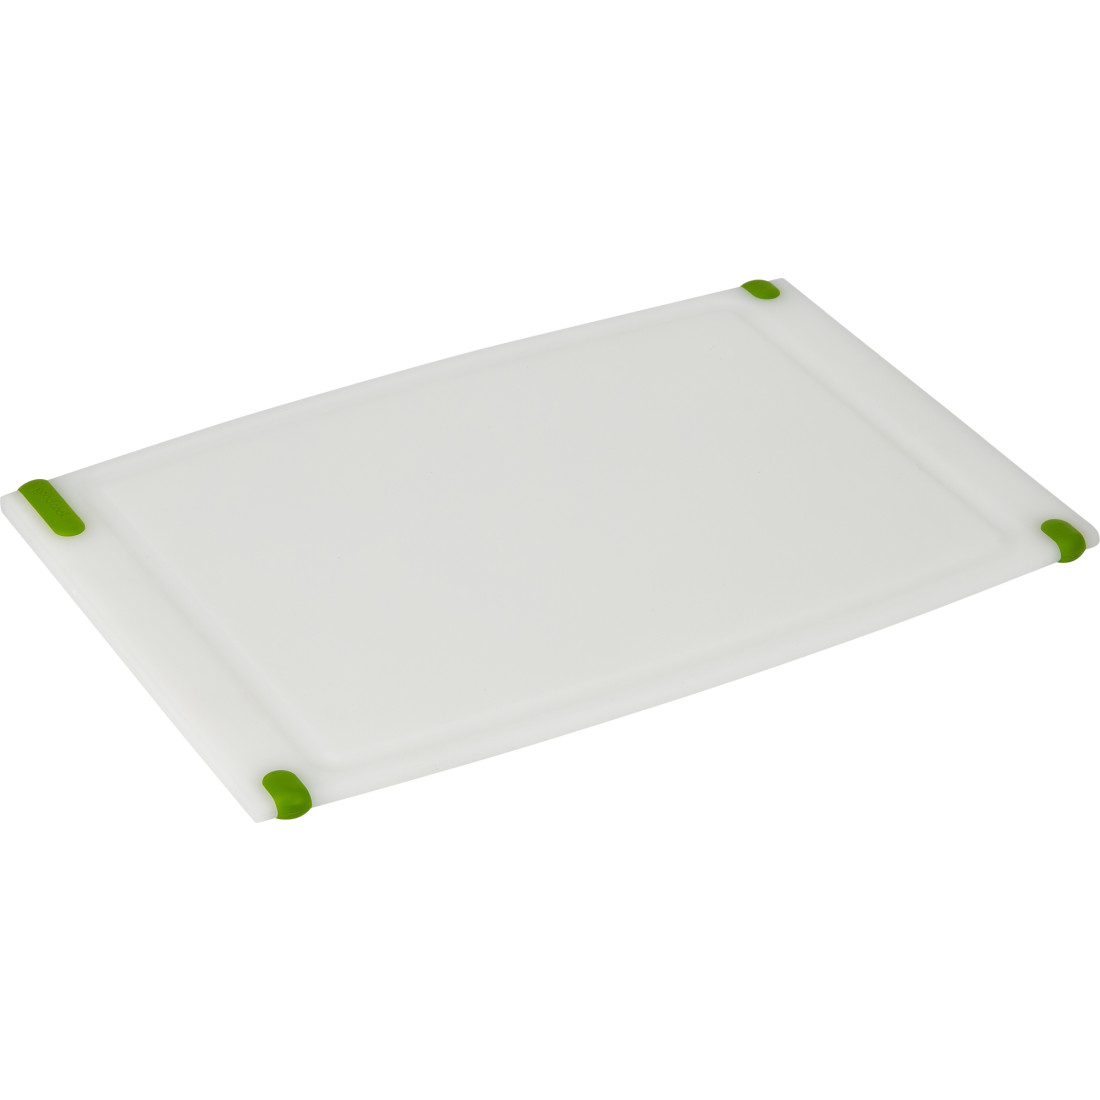 15 x 20 Green Plastic Cutting Board w/ Handle